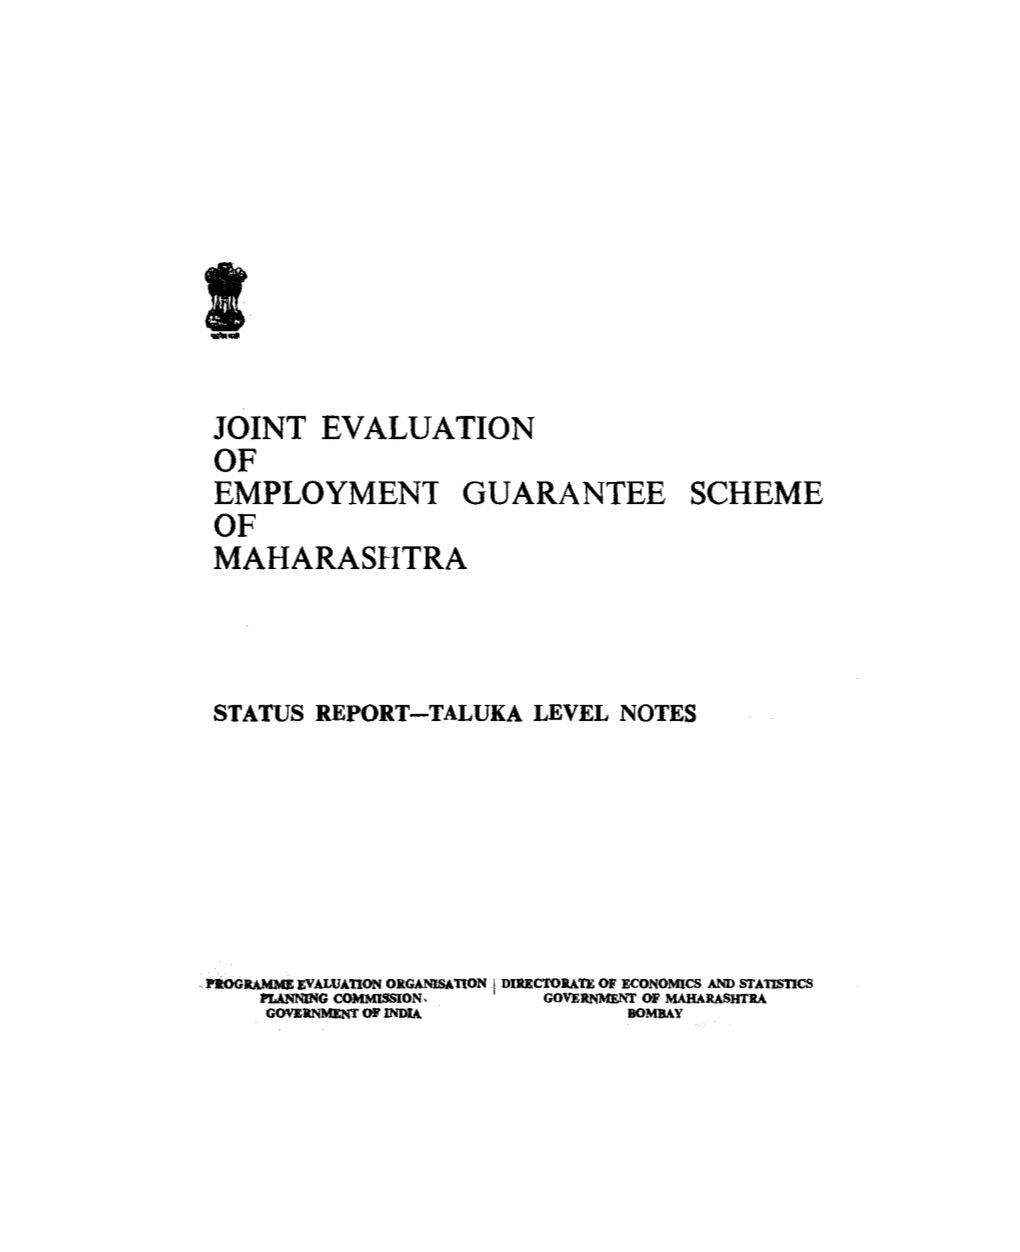 0019 Joint Evaluation of Employment Guarantee Scheme of Maharashtra